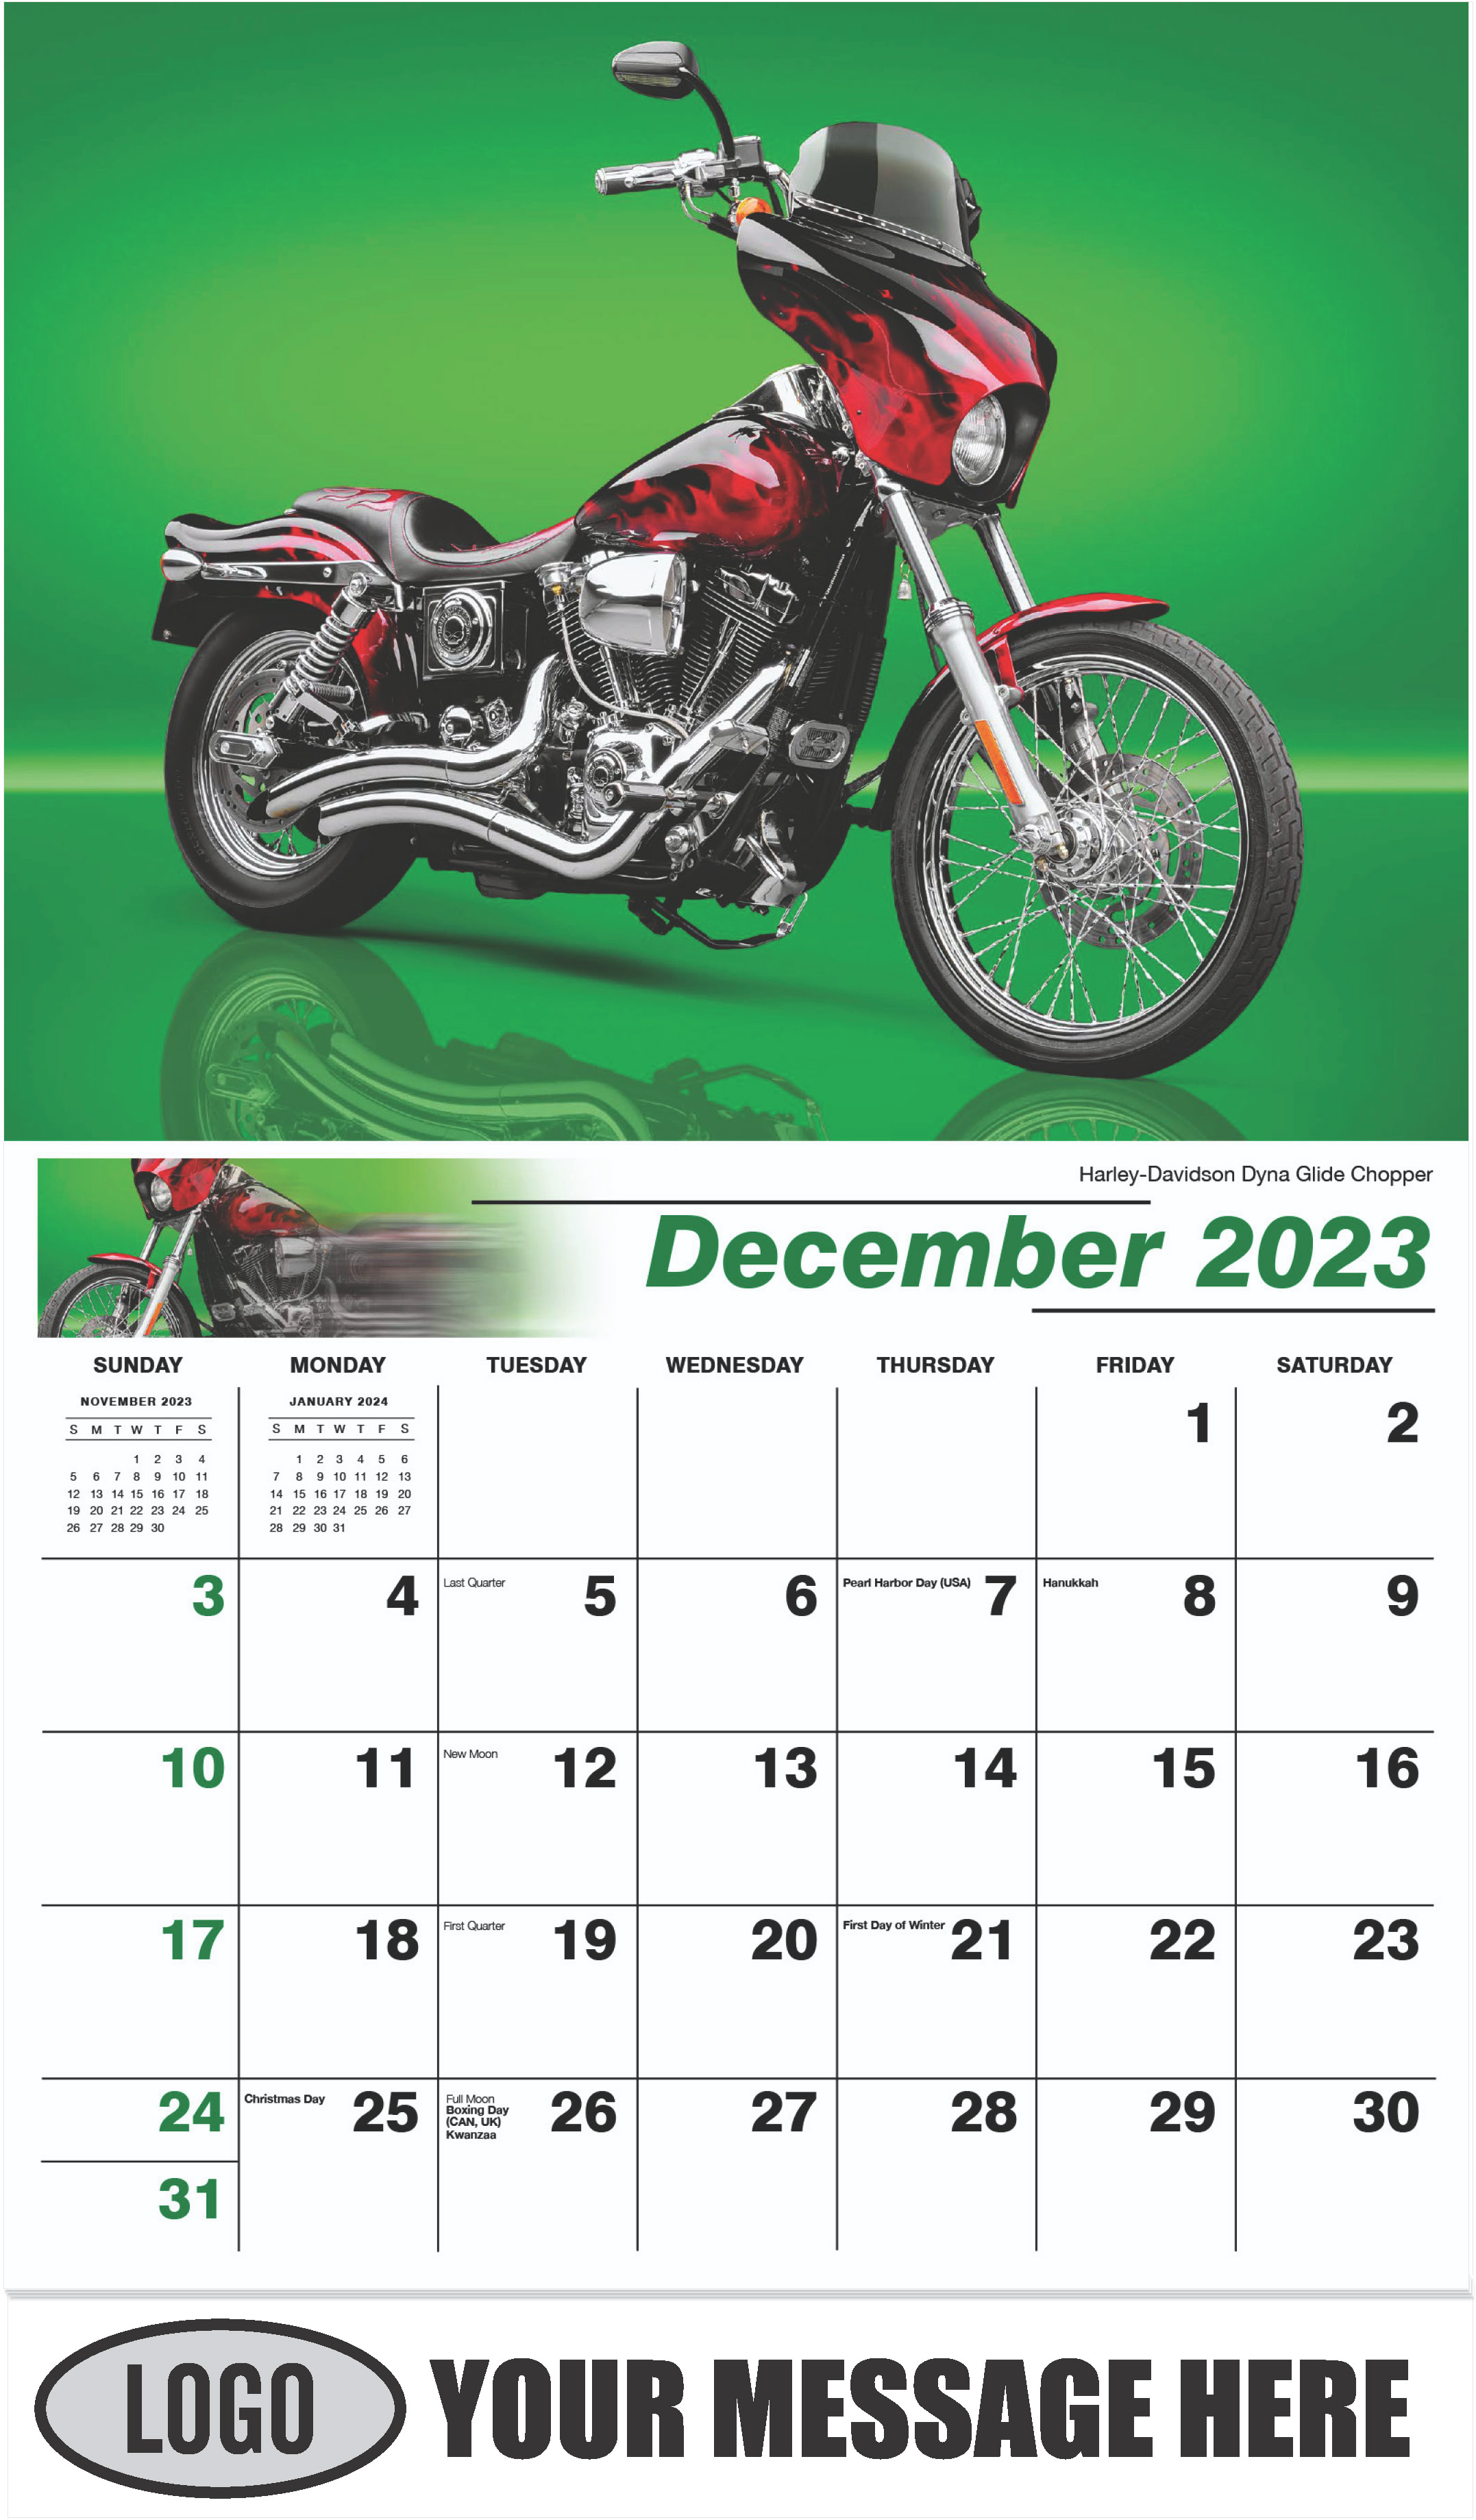 Harley-Davidson Dyna Glide Chopper - December 2023 - Motorcycle Mania 2023 Promotional Calendar